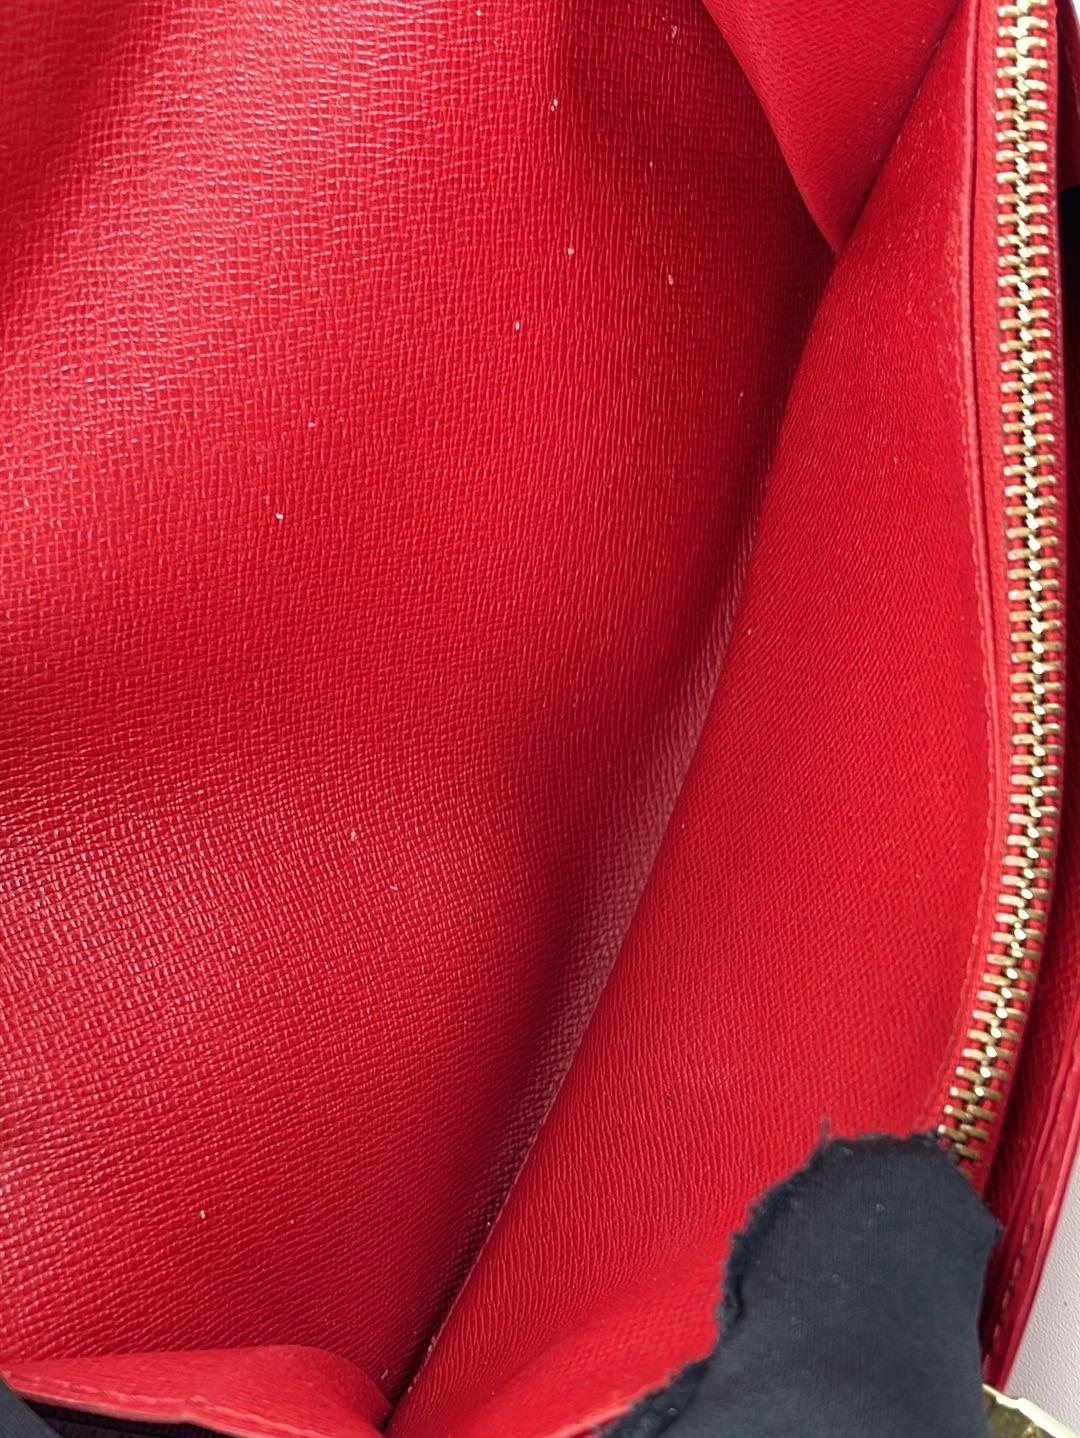 Vintage Louis Vuitton Porte Tresor International Trifold Red Epi Leather Long Wallet SR0051 031023